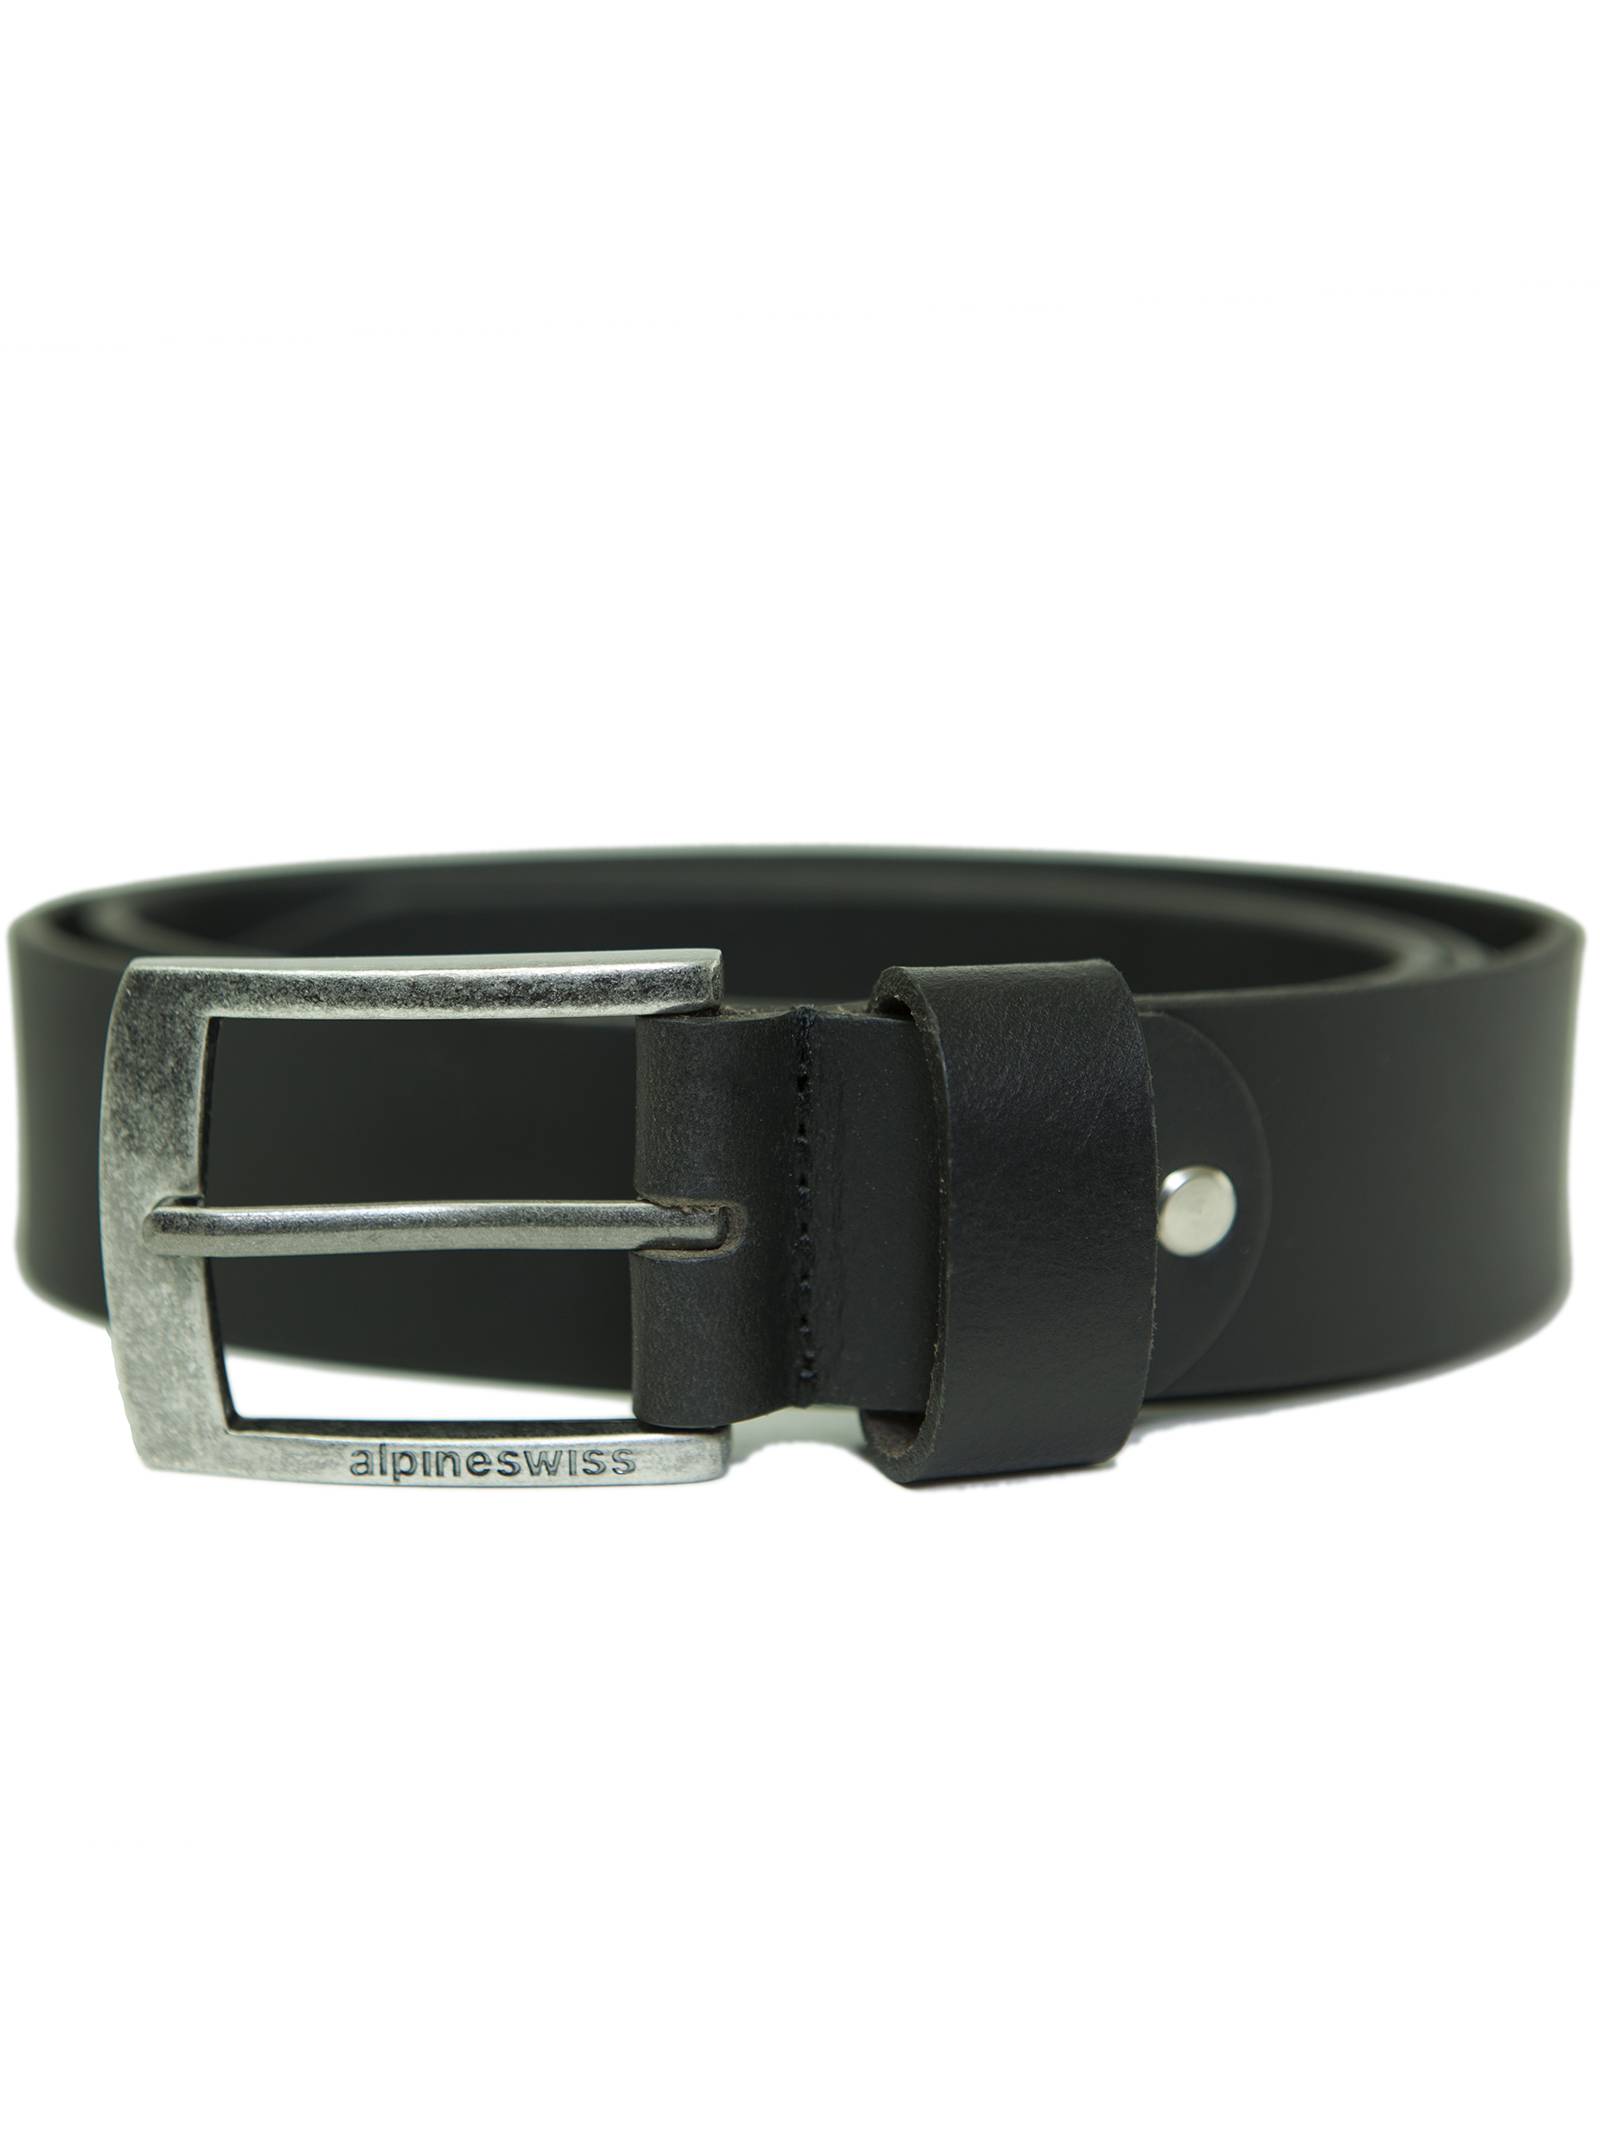 Alpine Swiss Mens Belt Genuine Leather Slim 1.25” Casual Jean Belt Dakota Buckle - image 2 of 6